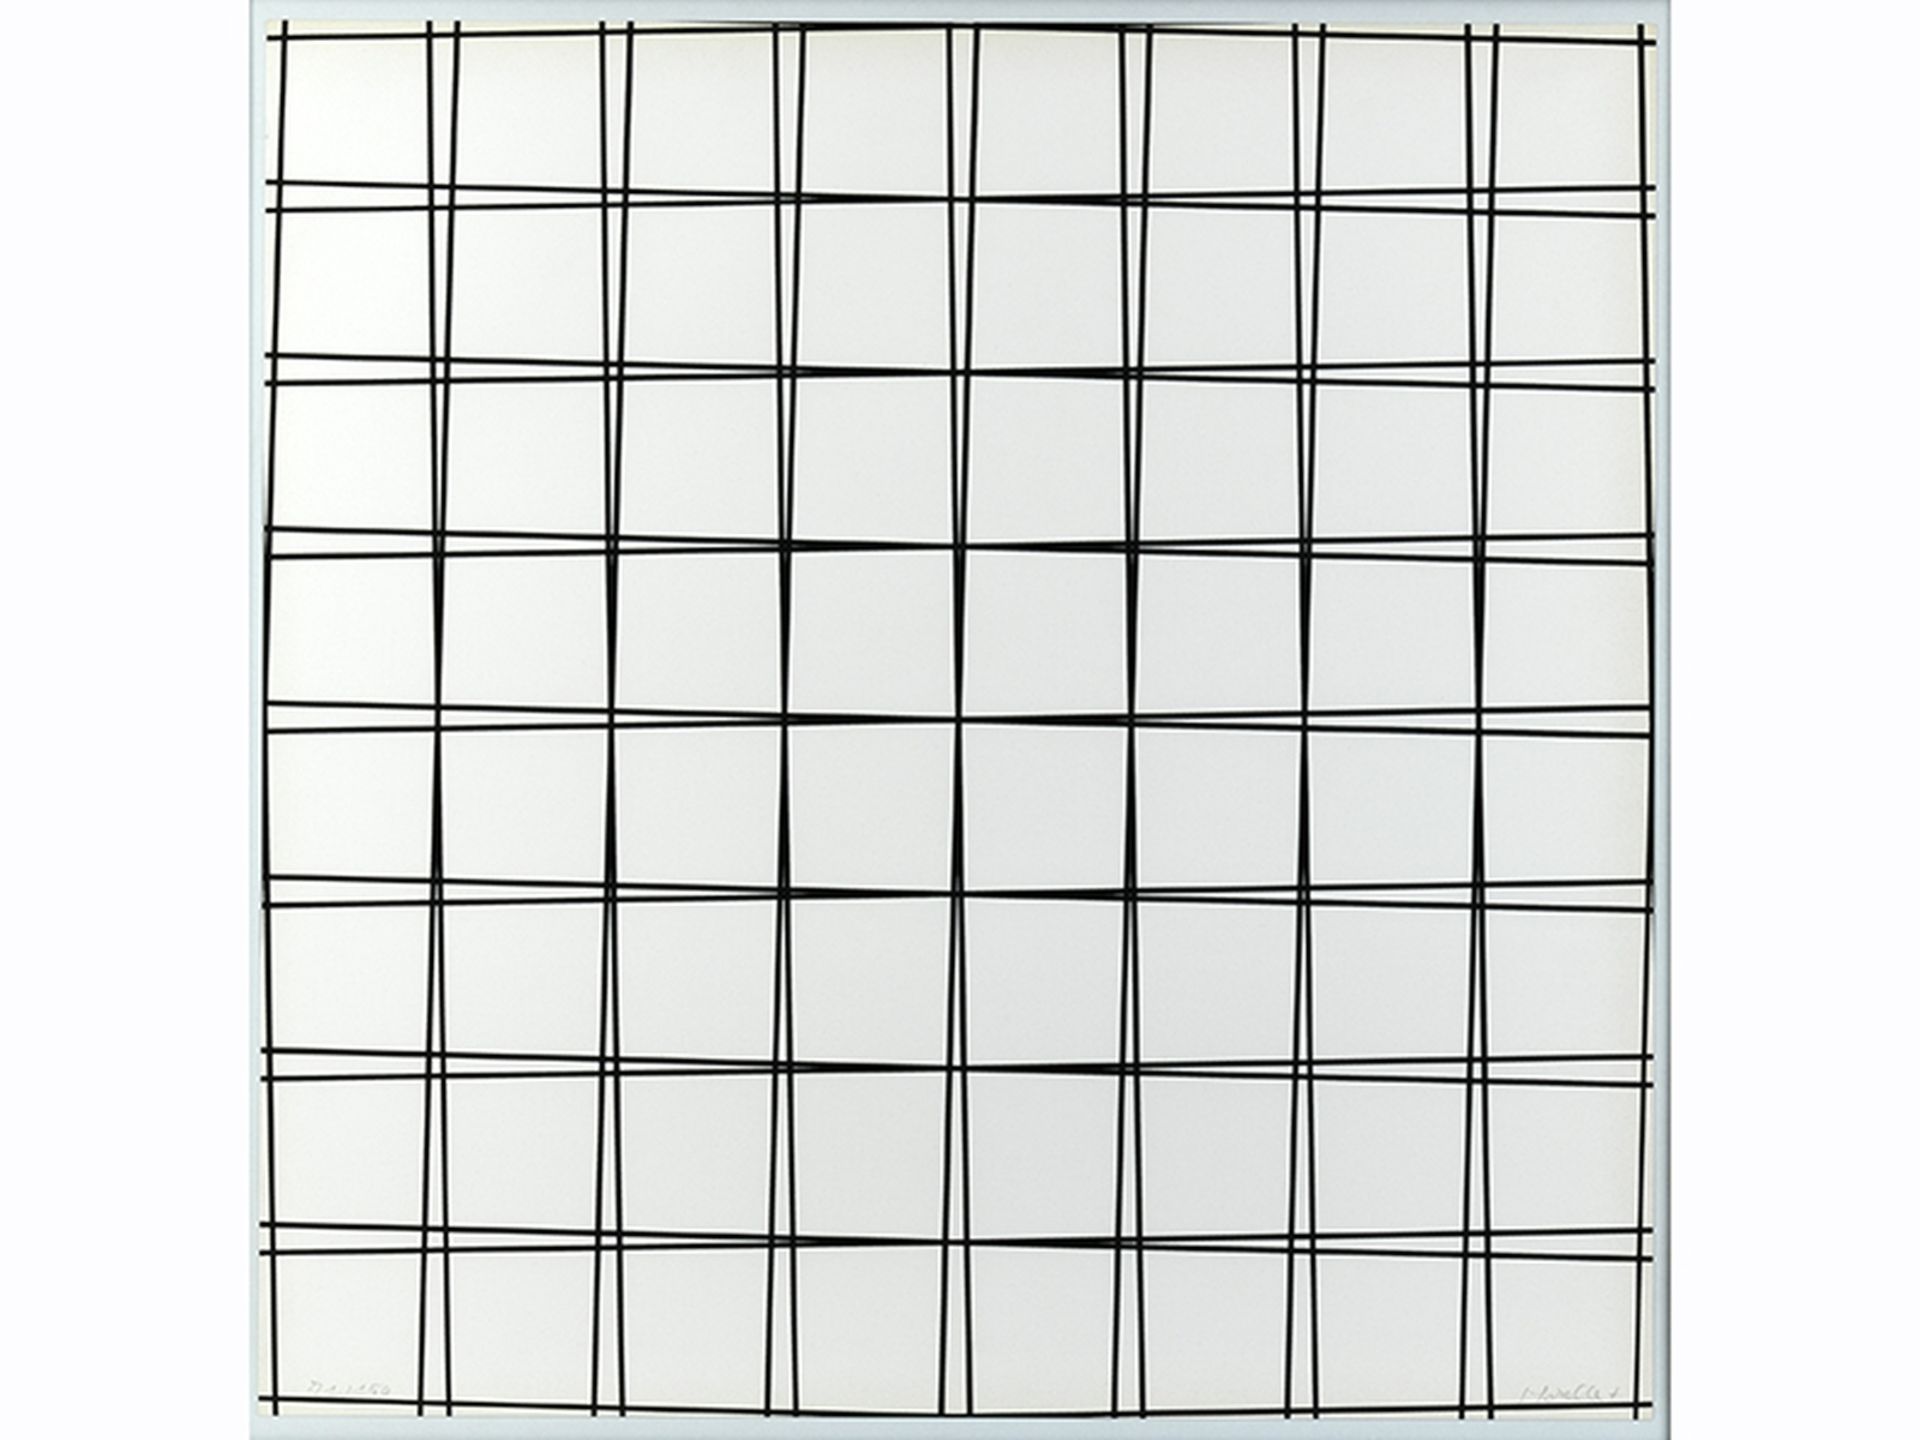 Morellet, François1926 Cholet - 2016 ebenda Ohne Titel Serigrafie auf Papier. 69 x 69 cm. Recht - Bild 3 aus 3